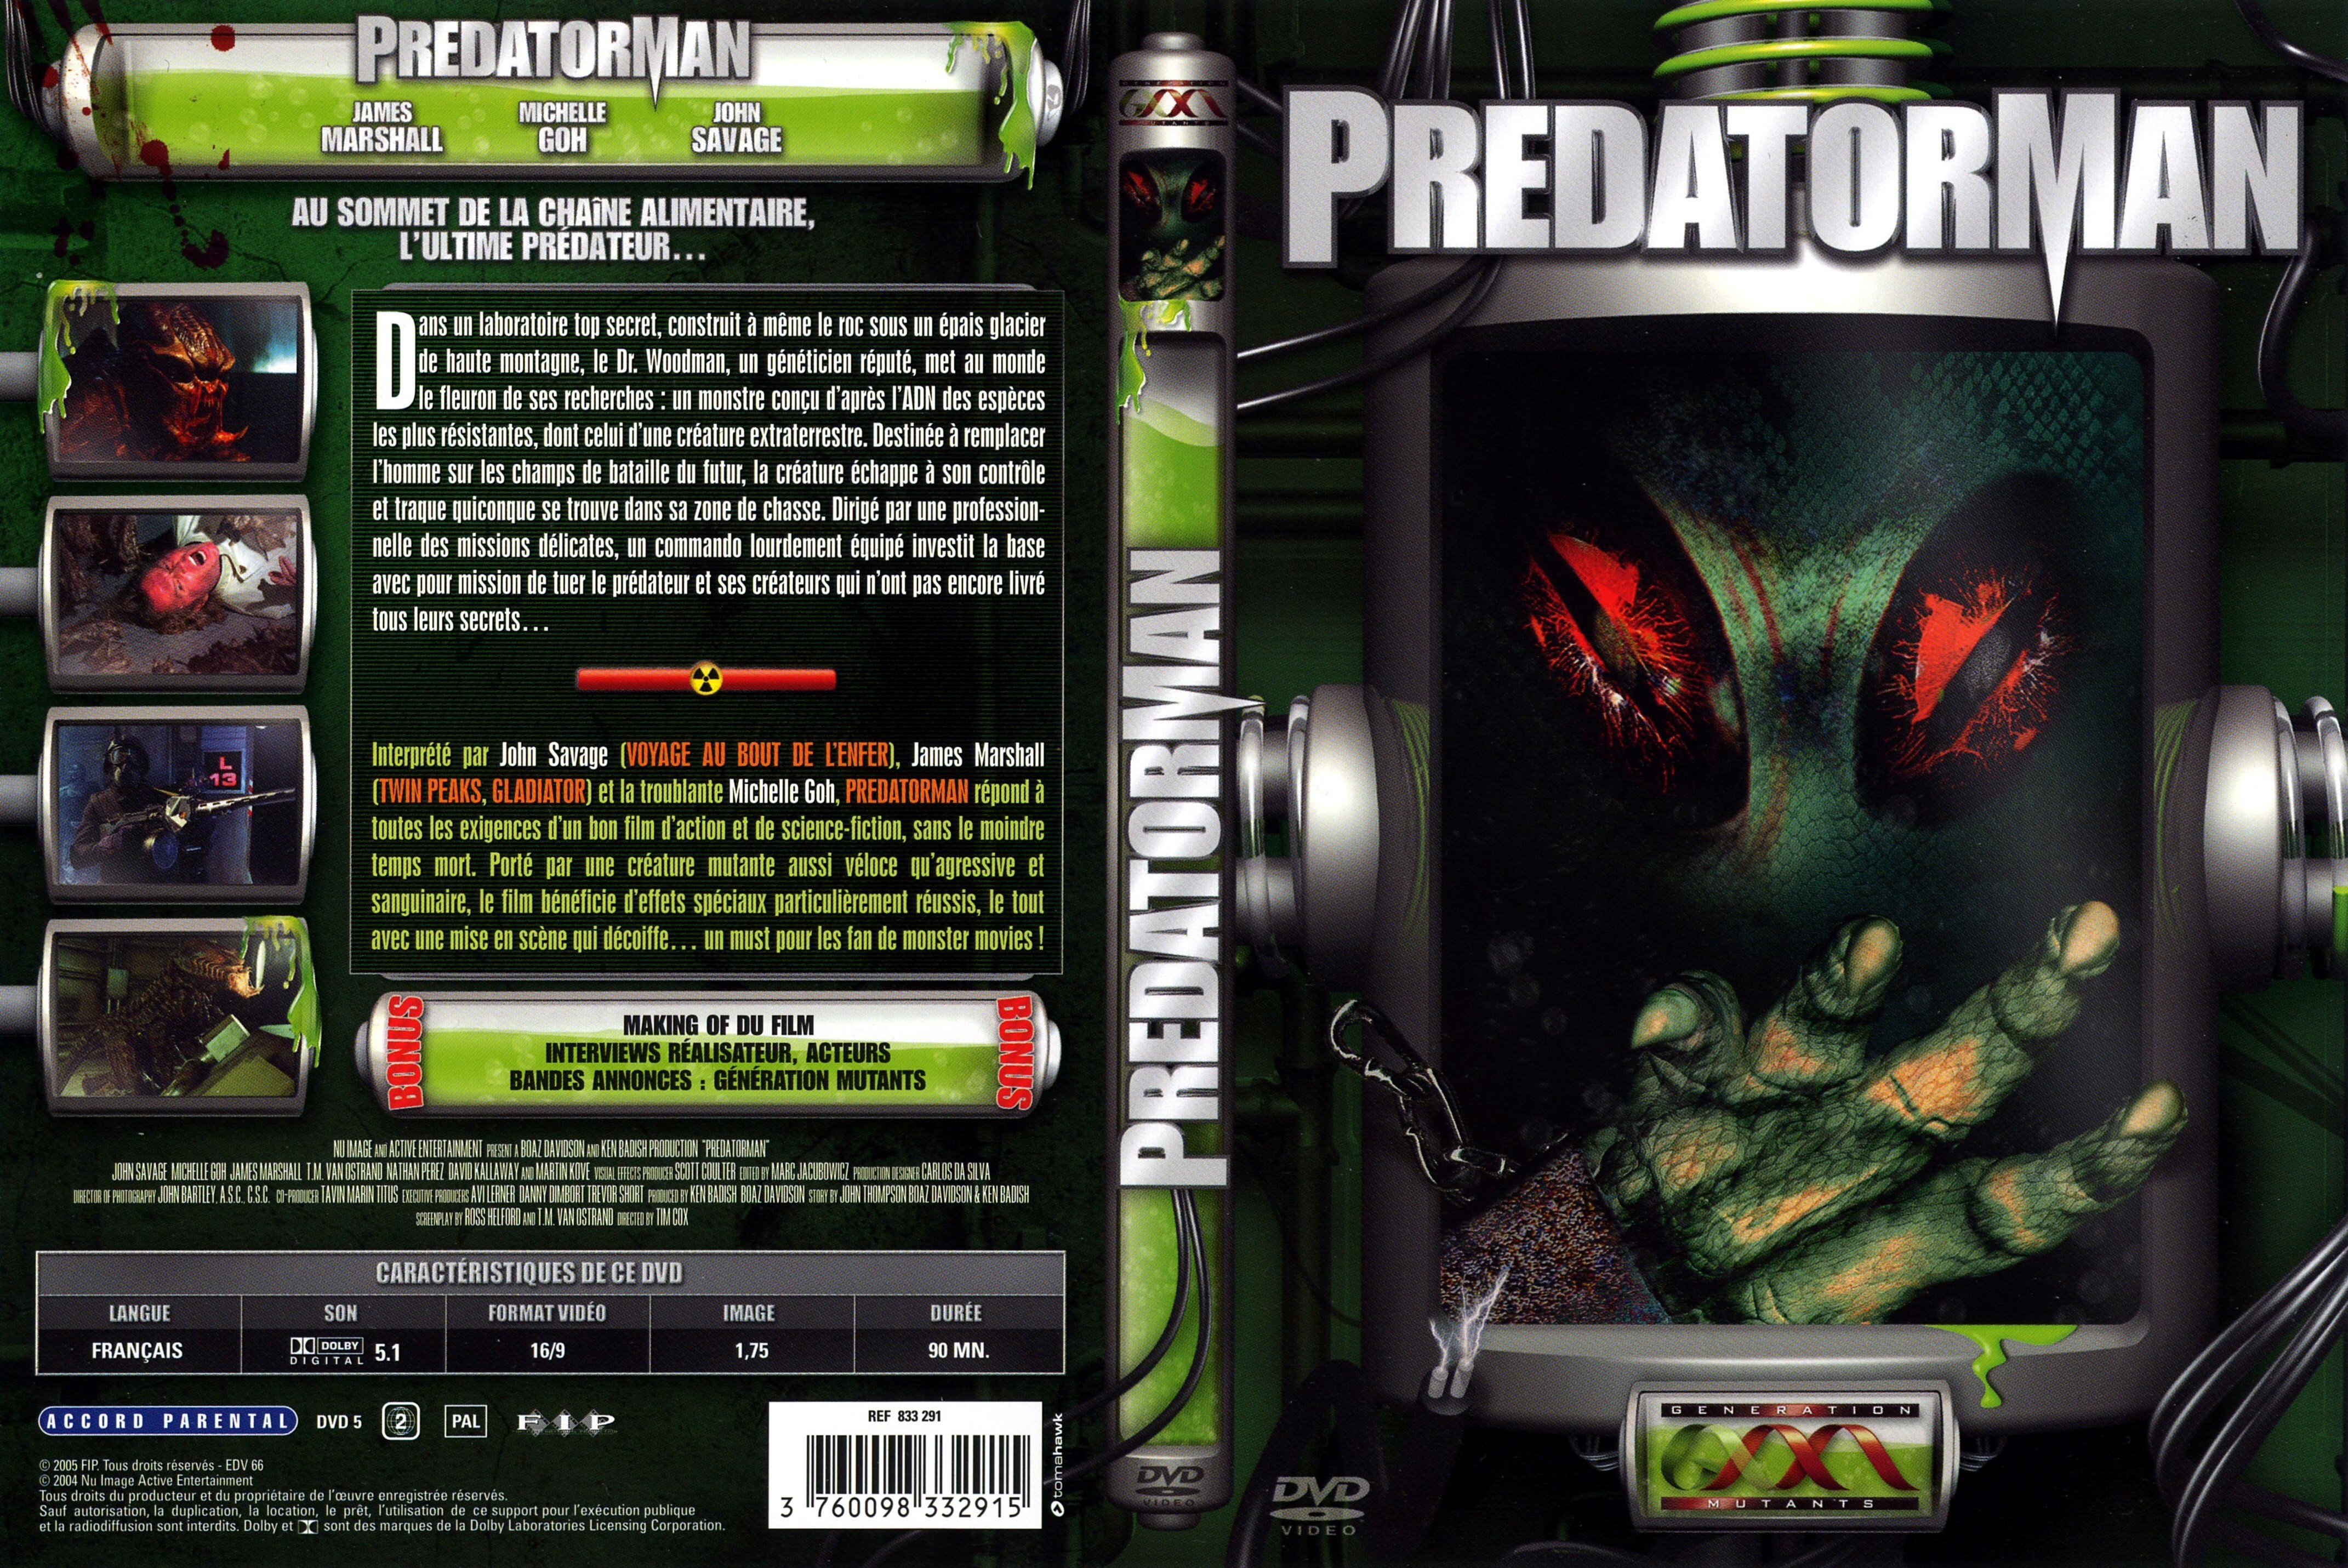 Jaquette DVD Predatorman